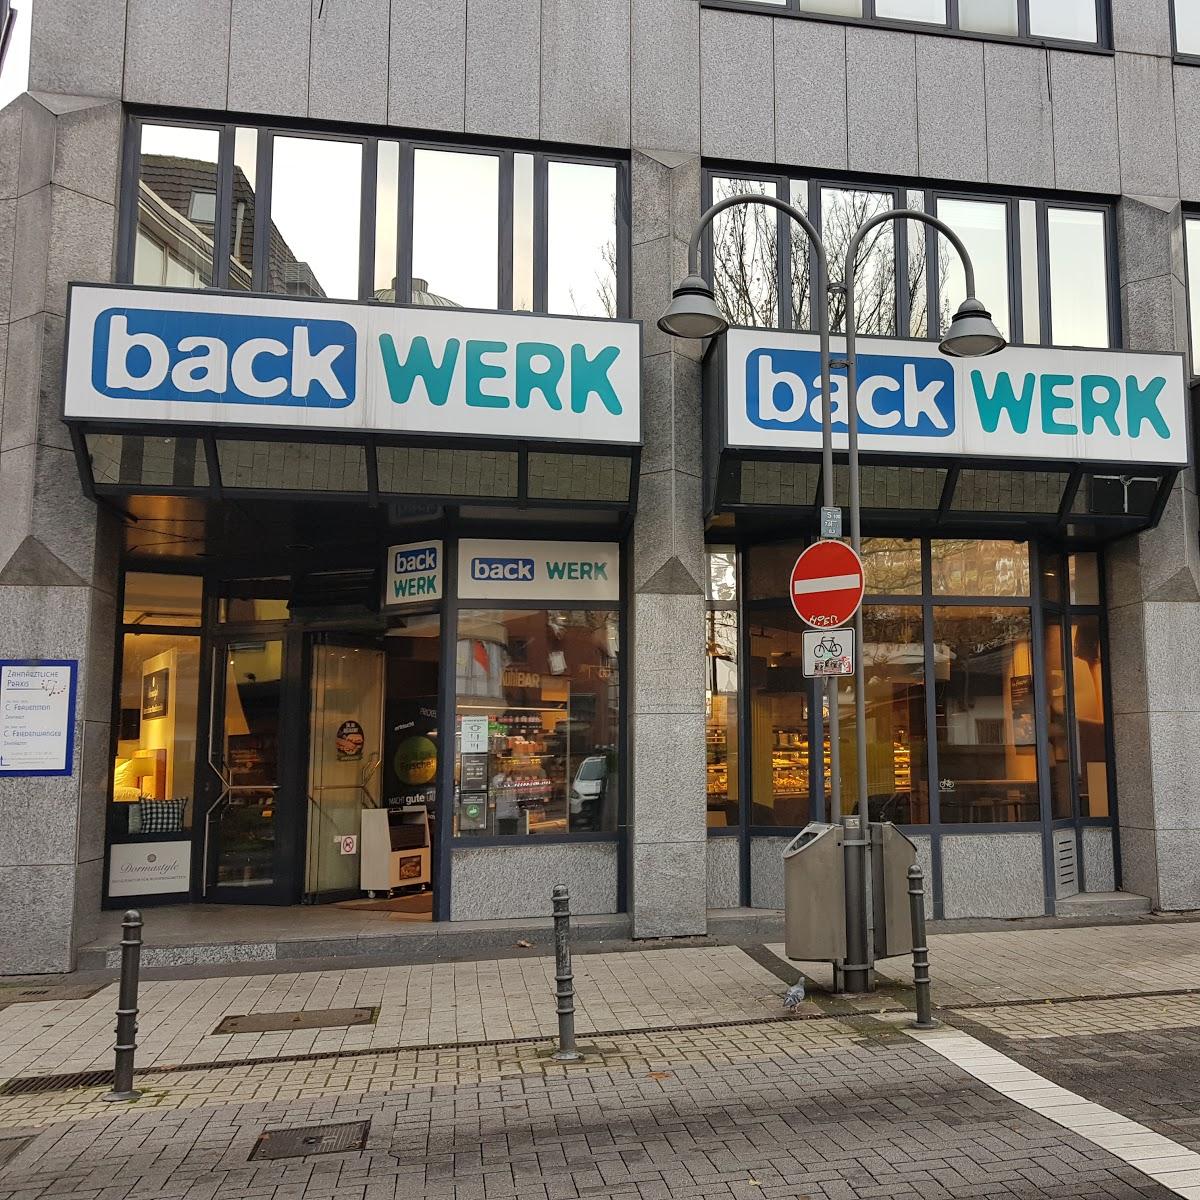 Restaurant "BackWerk" in Köln